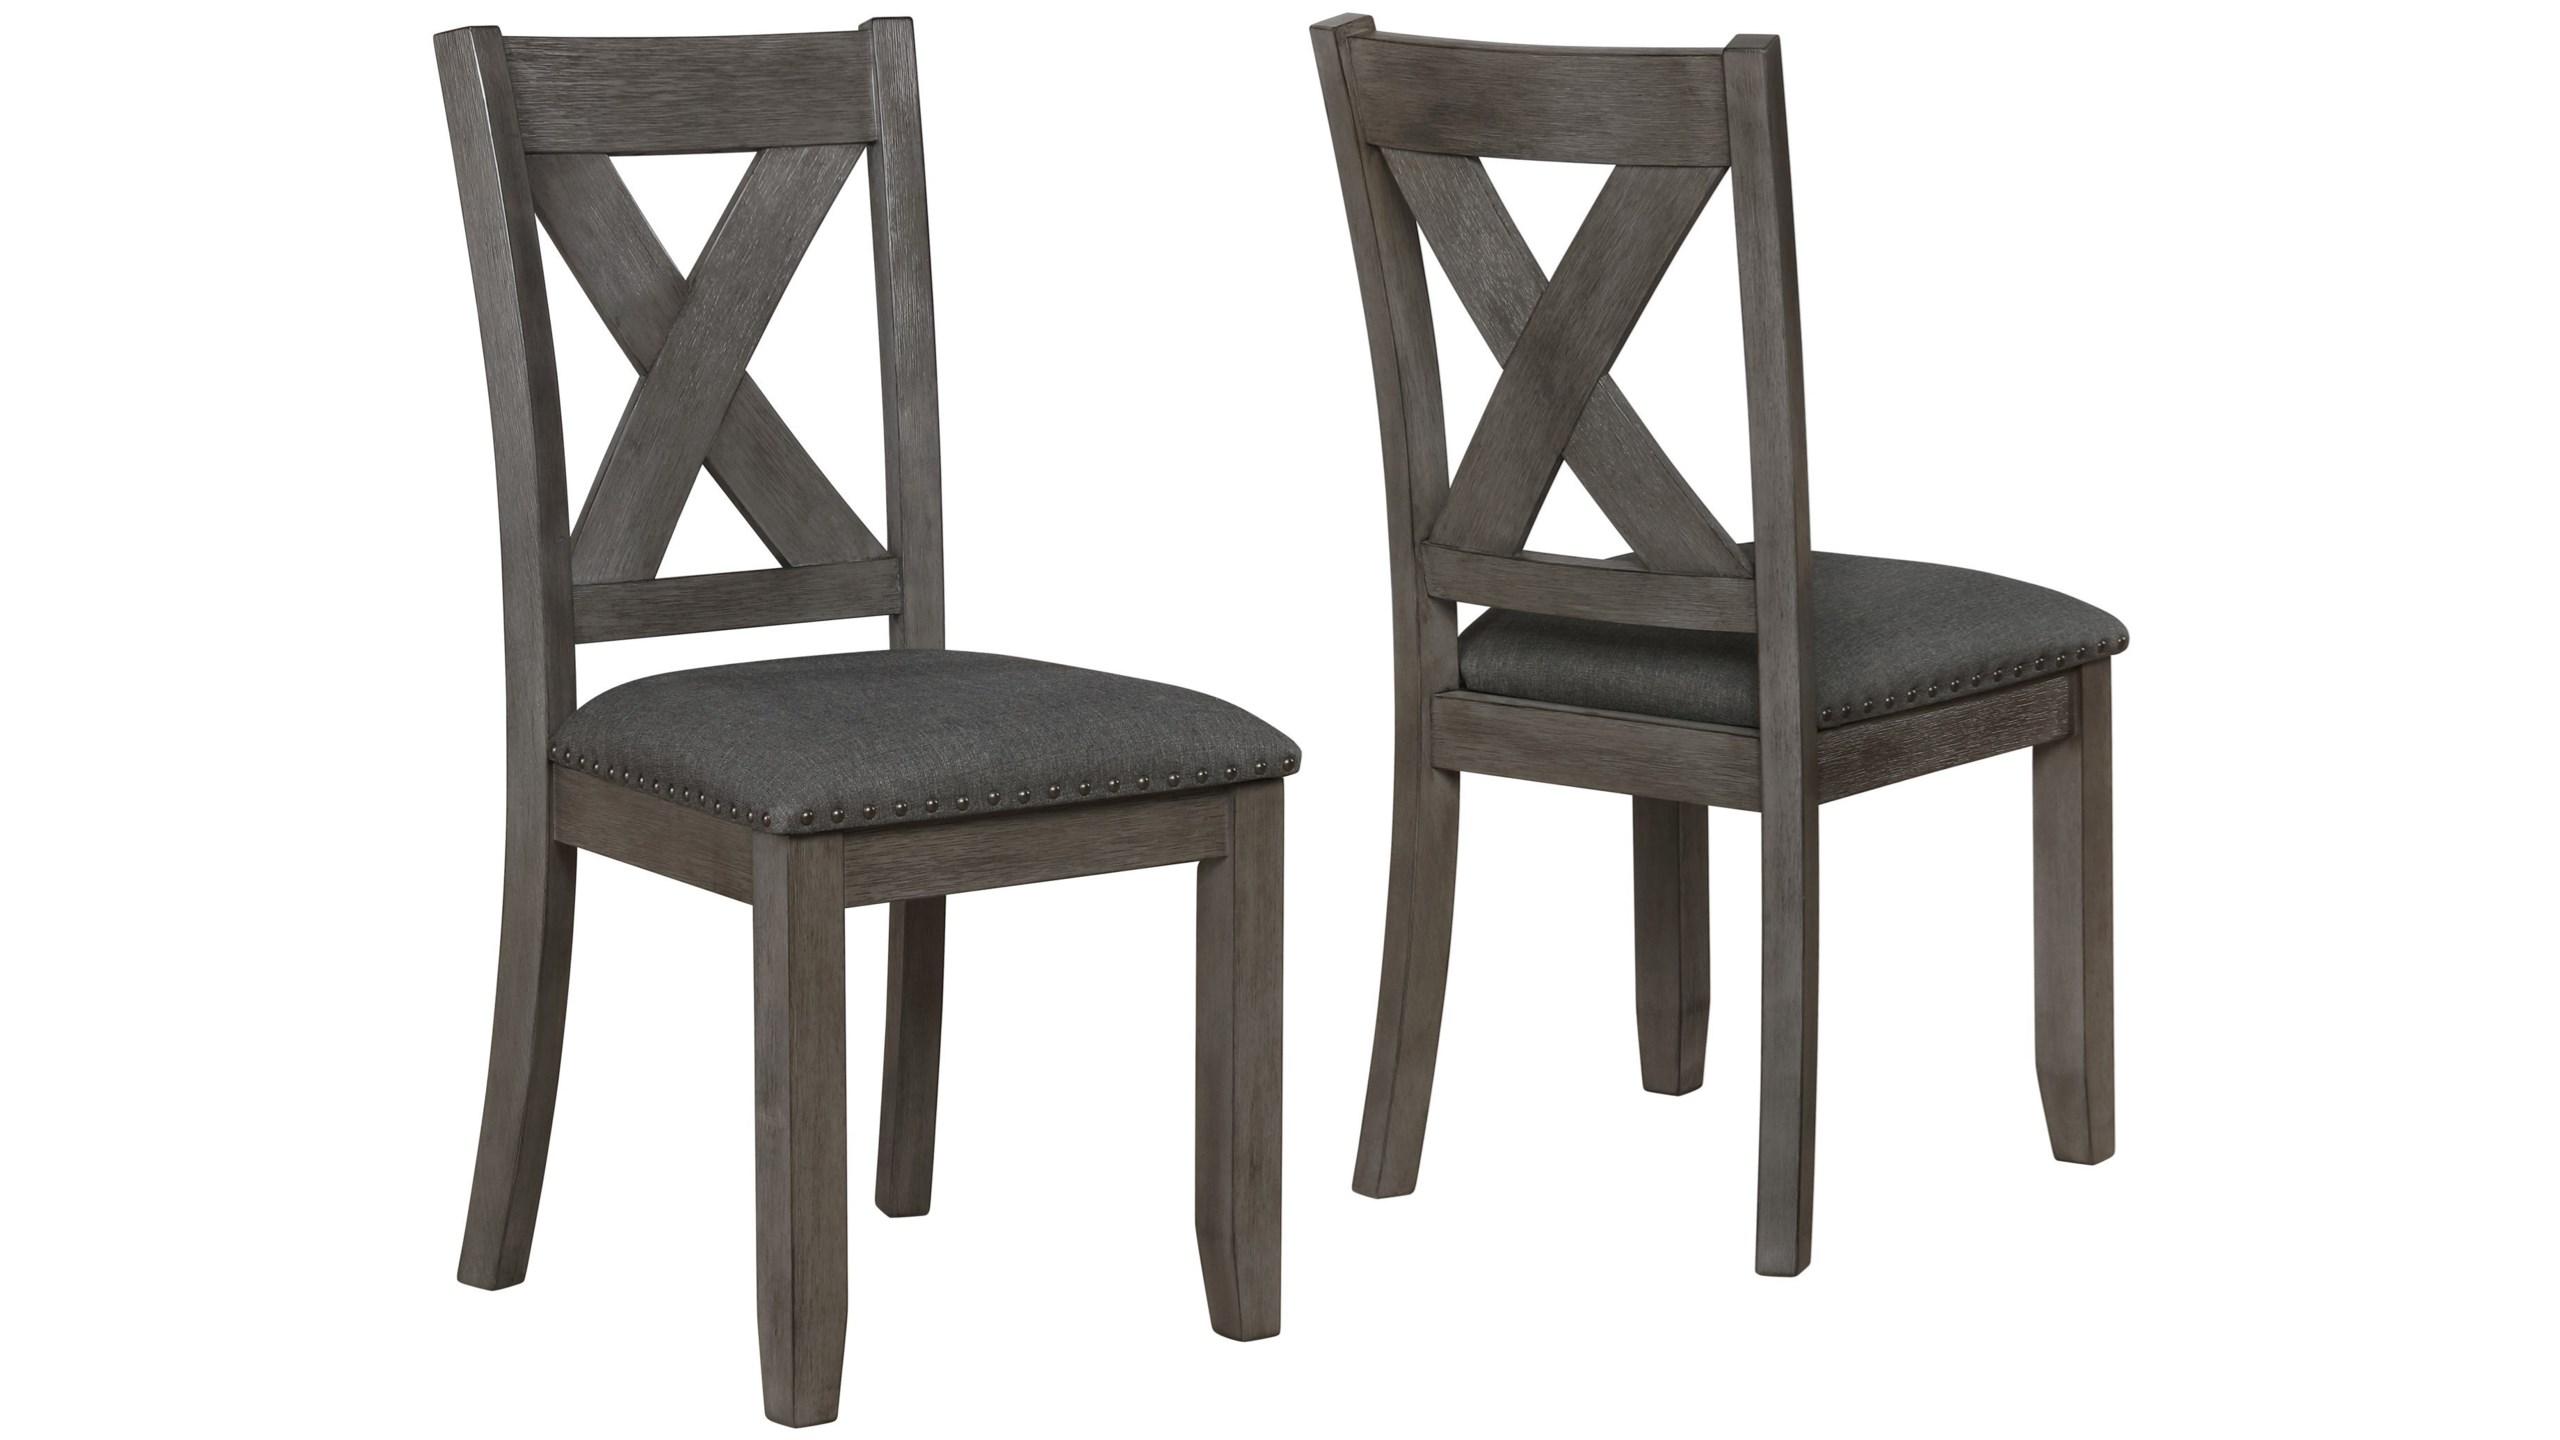 Simple, Farmhouse Dining Chair Set Favella 2323DGY-S-2pcs in Dark Gray Linen